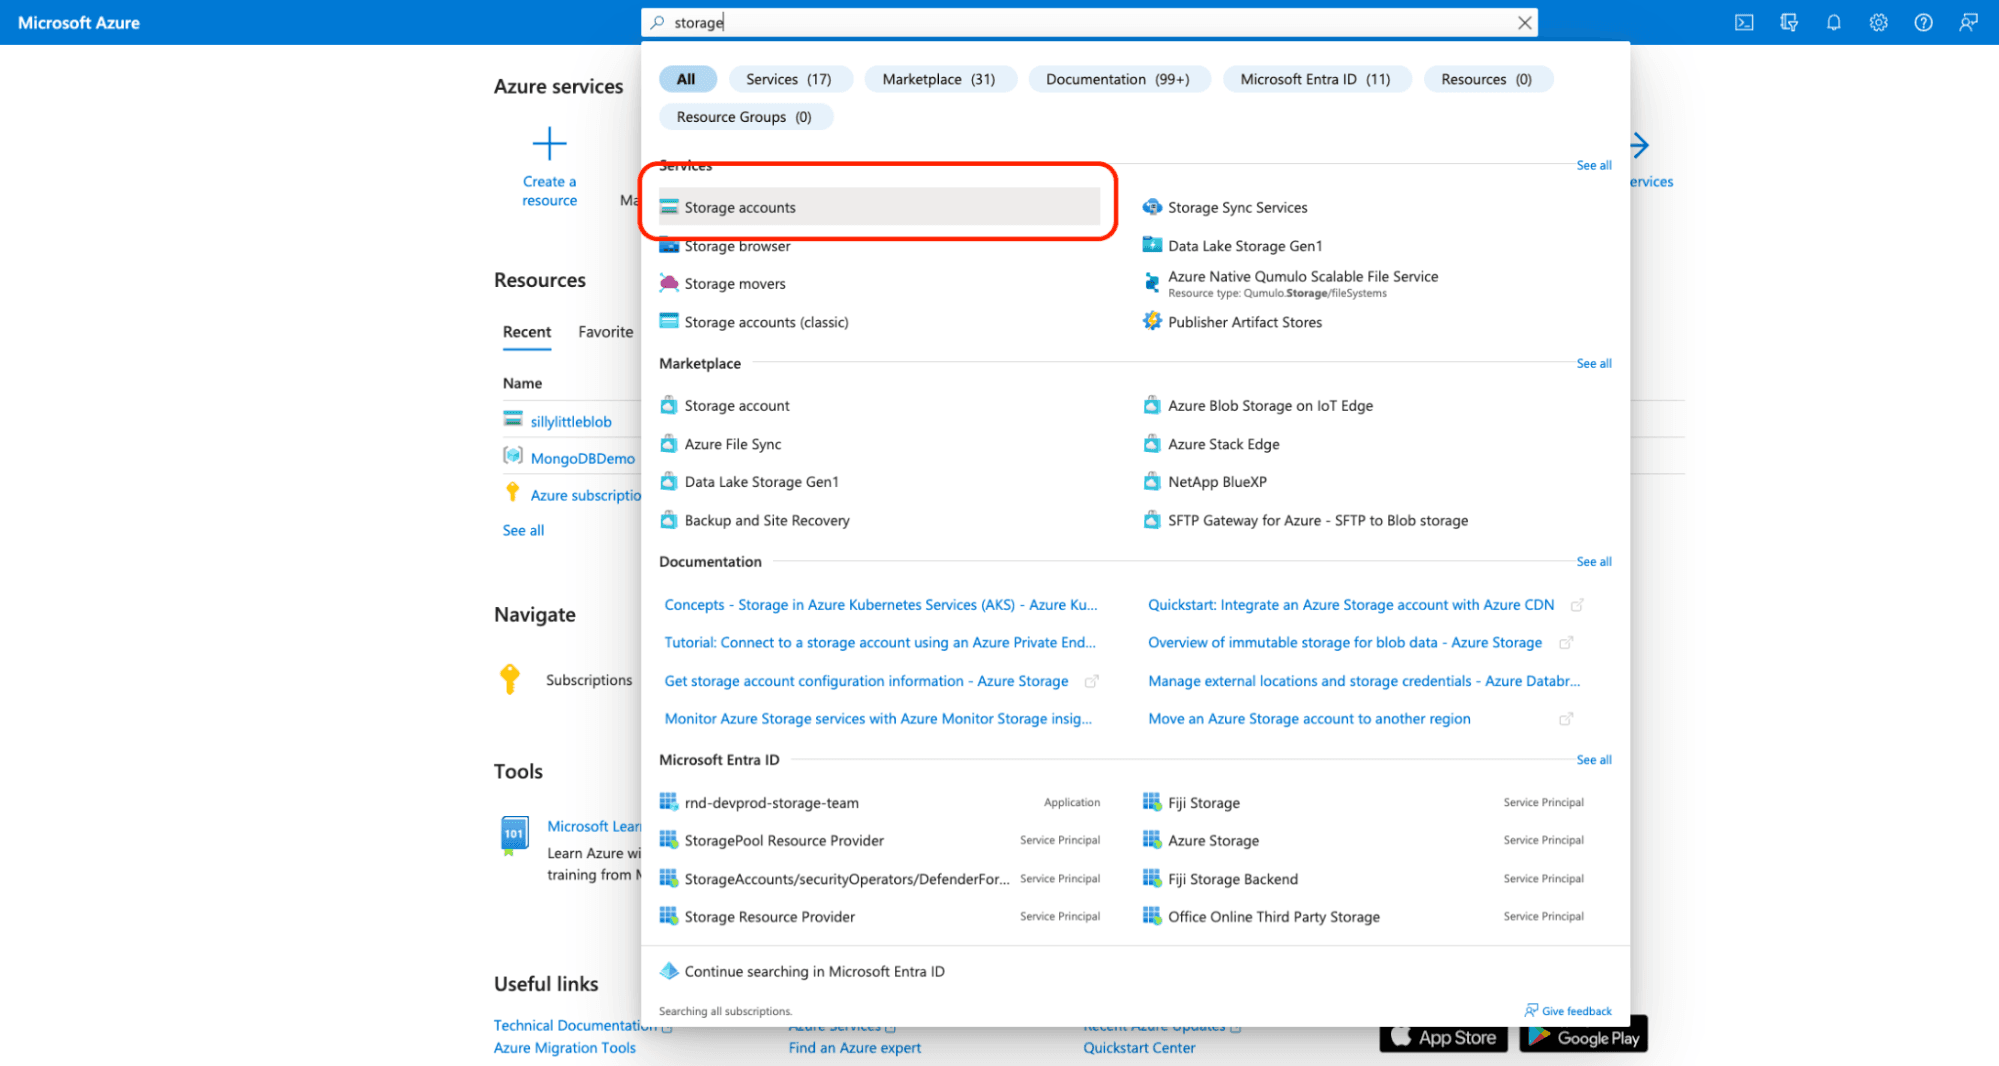 Microsoft portal dashboard showing Storage accounts option